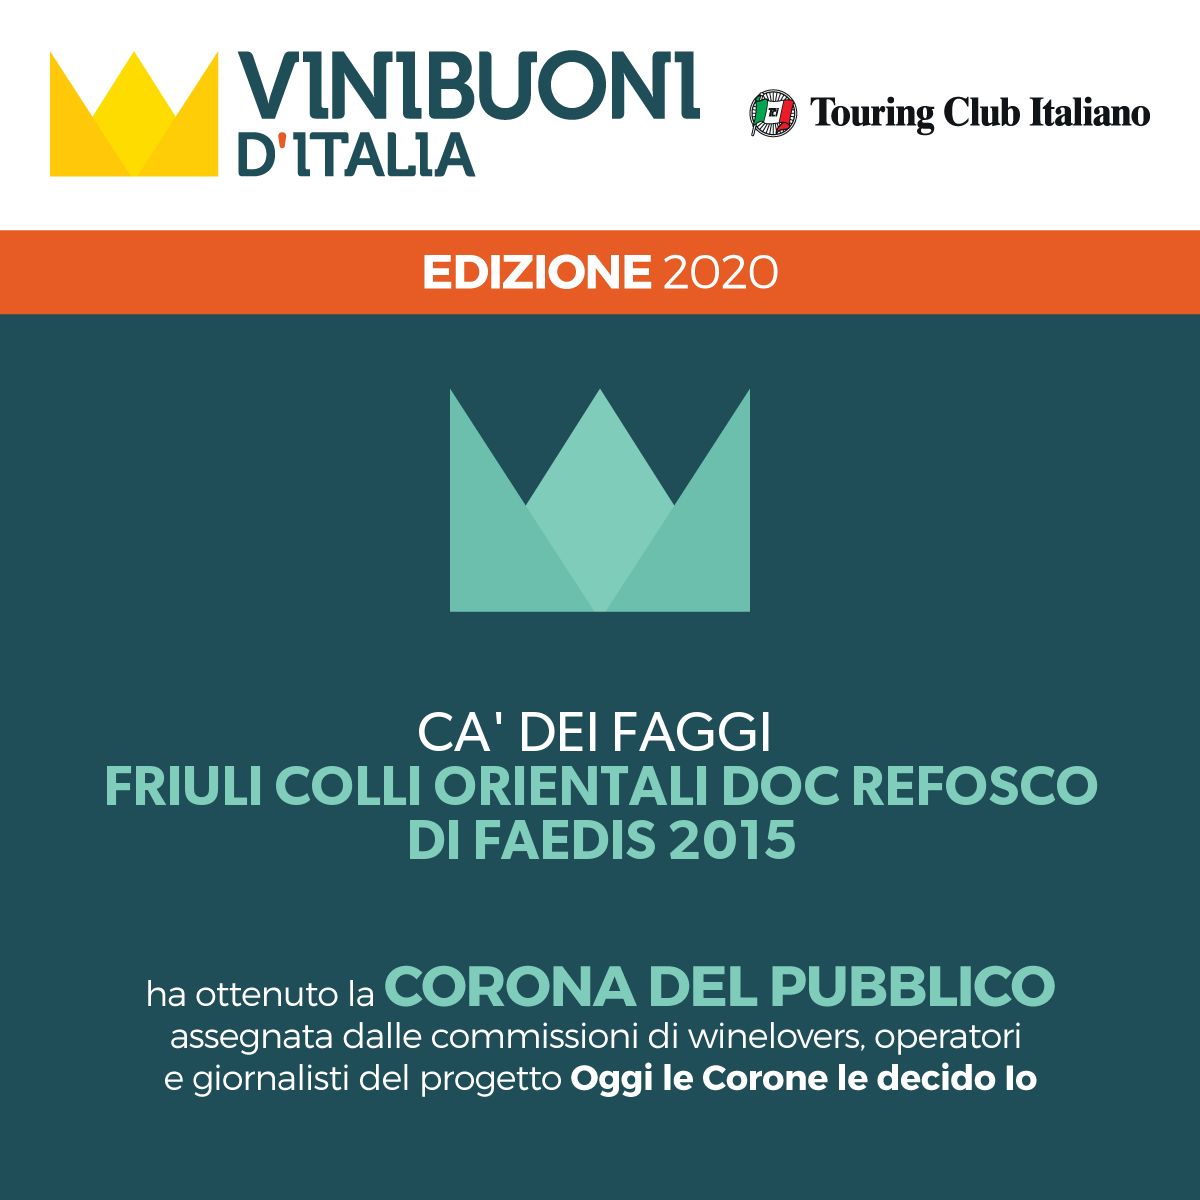 Corona Vinibuoni d'Italia